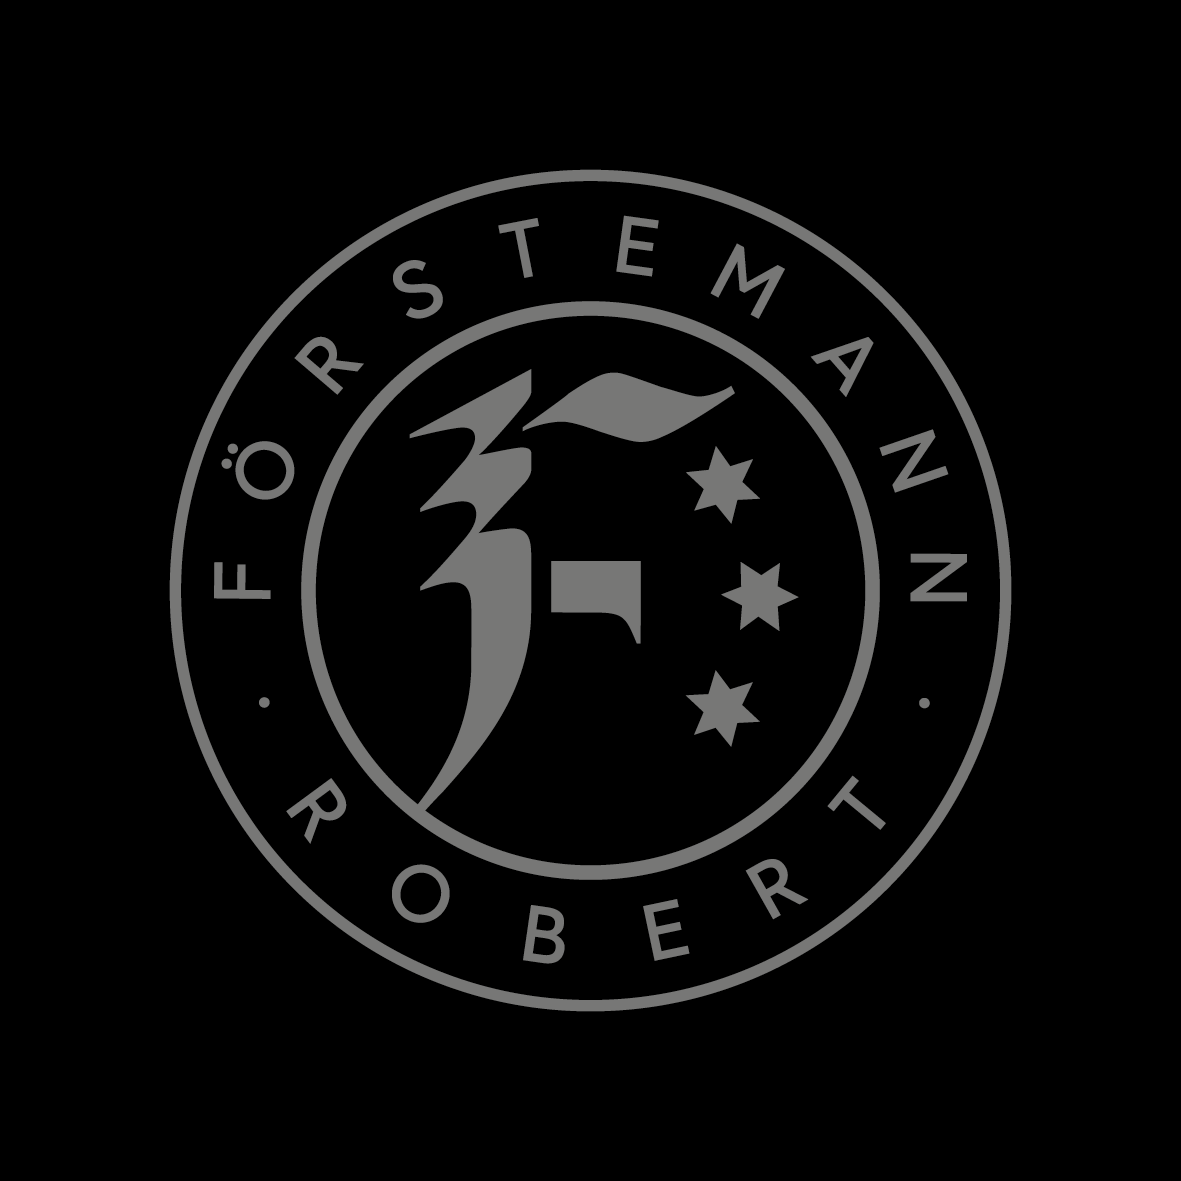 Marken-Logo Branding für Robert Förstemann